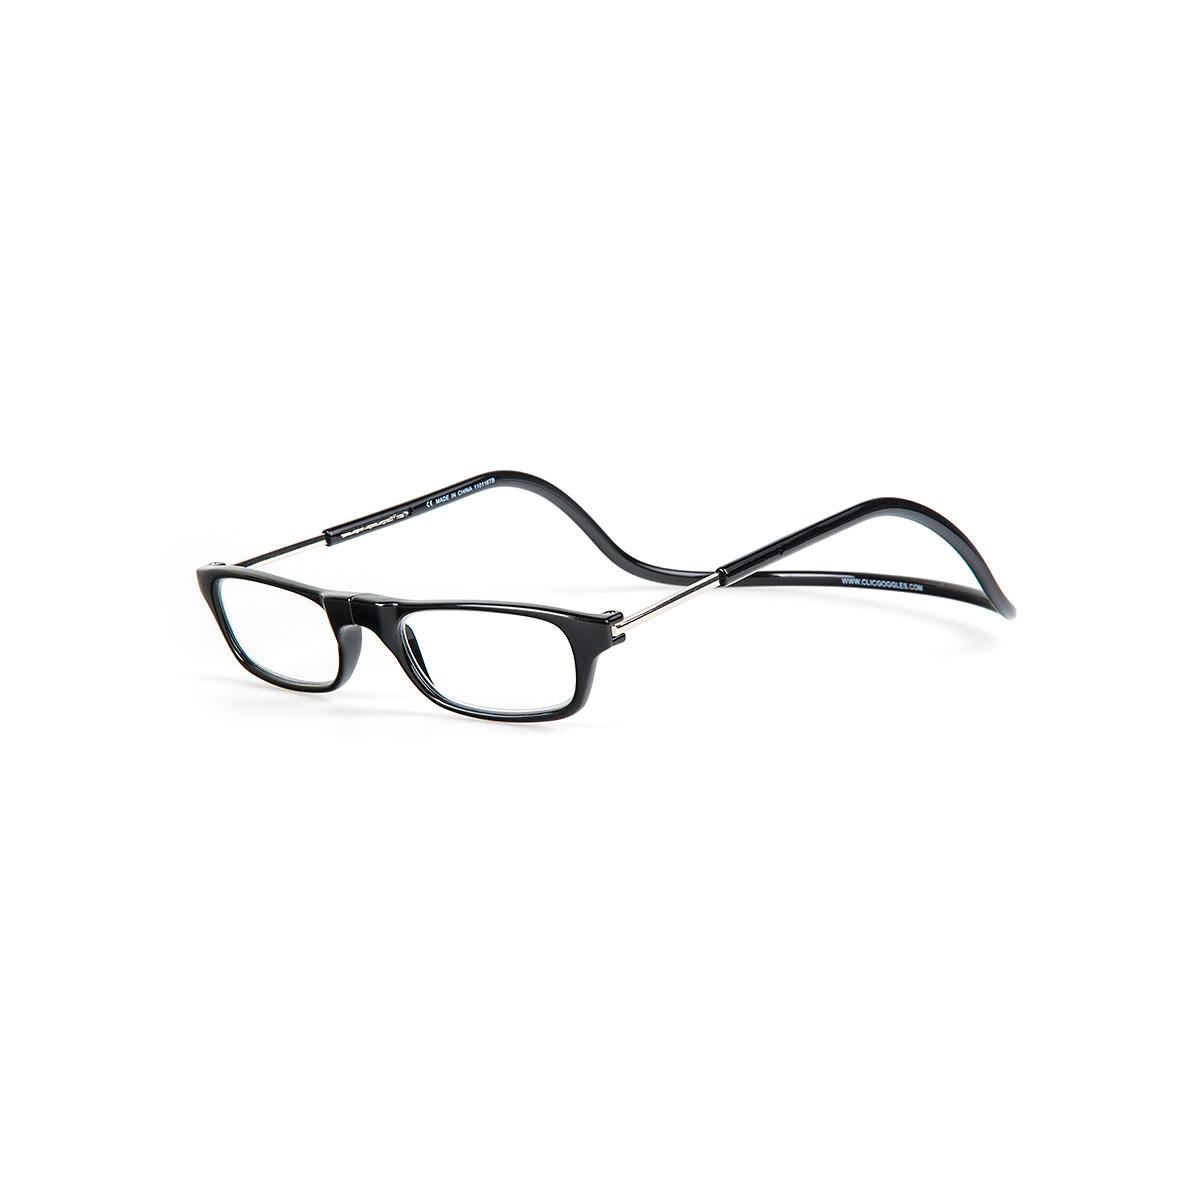  Clic Reading Glasses - Black